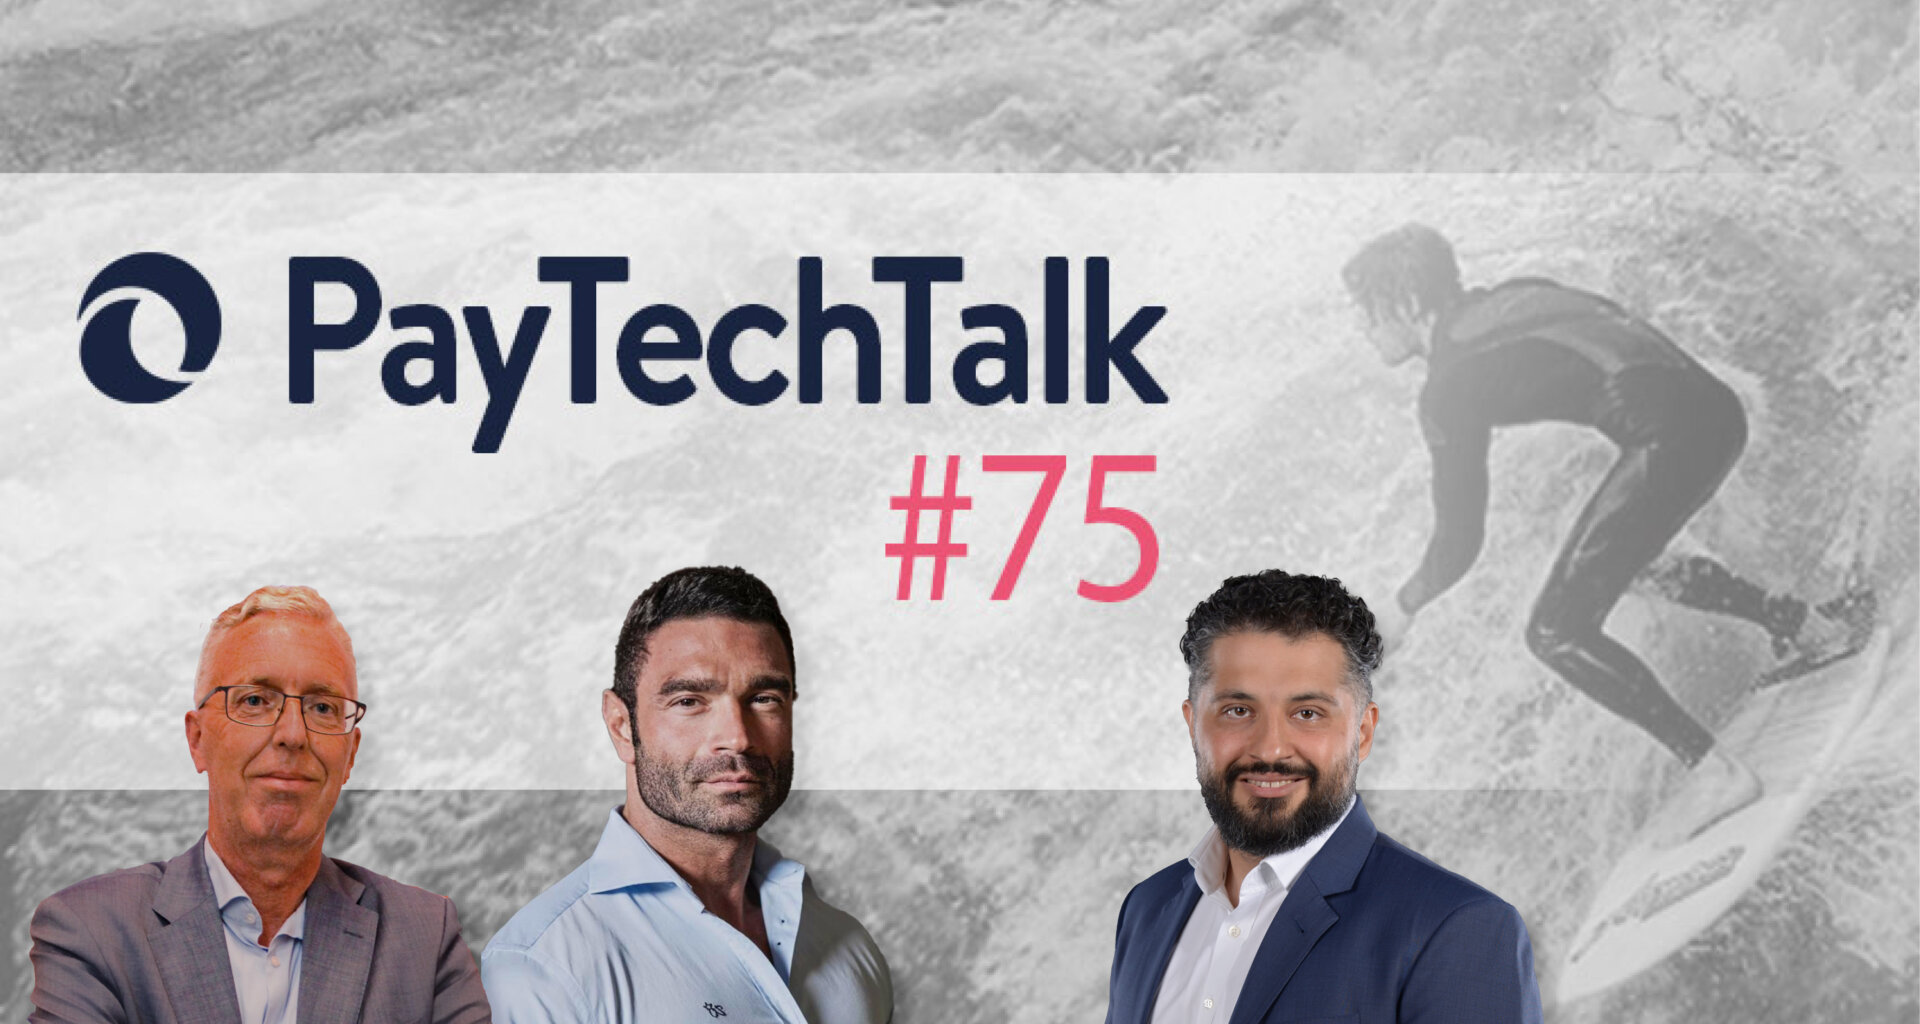 PayTechTalk #75 - Algorithmic Stablecoins & CBDC | Podcast by PayTechLaw with Alireza Siadat from Annerton